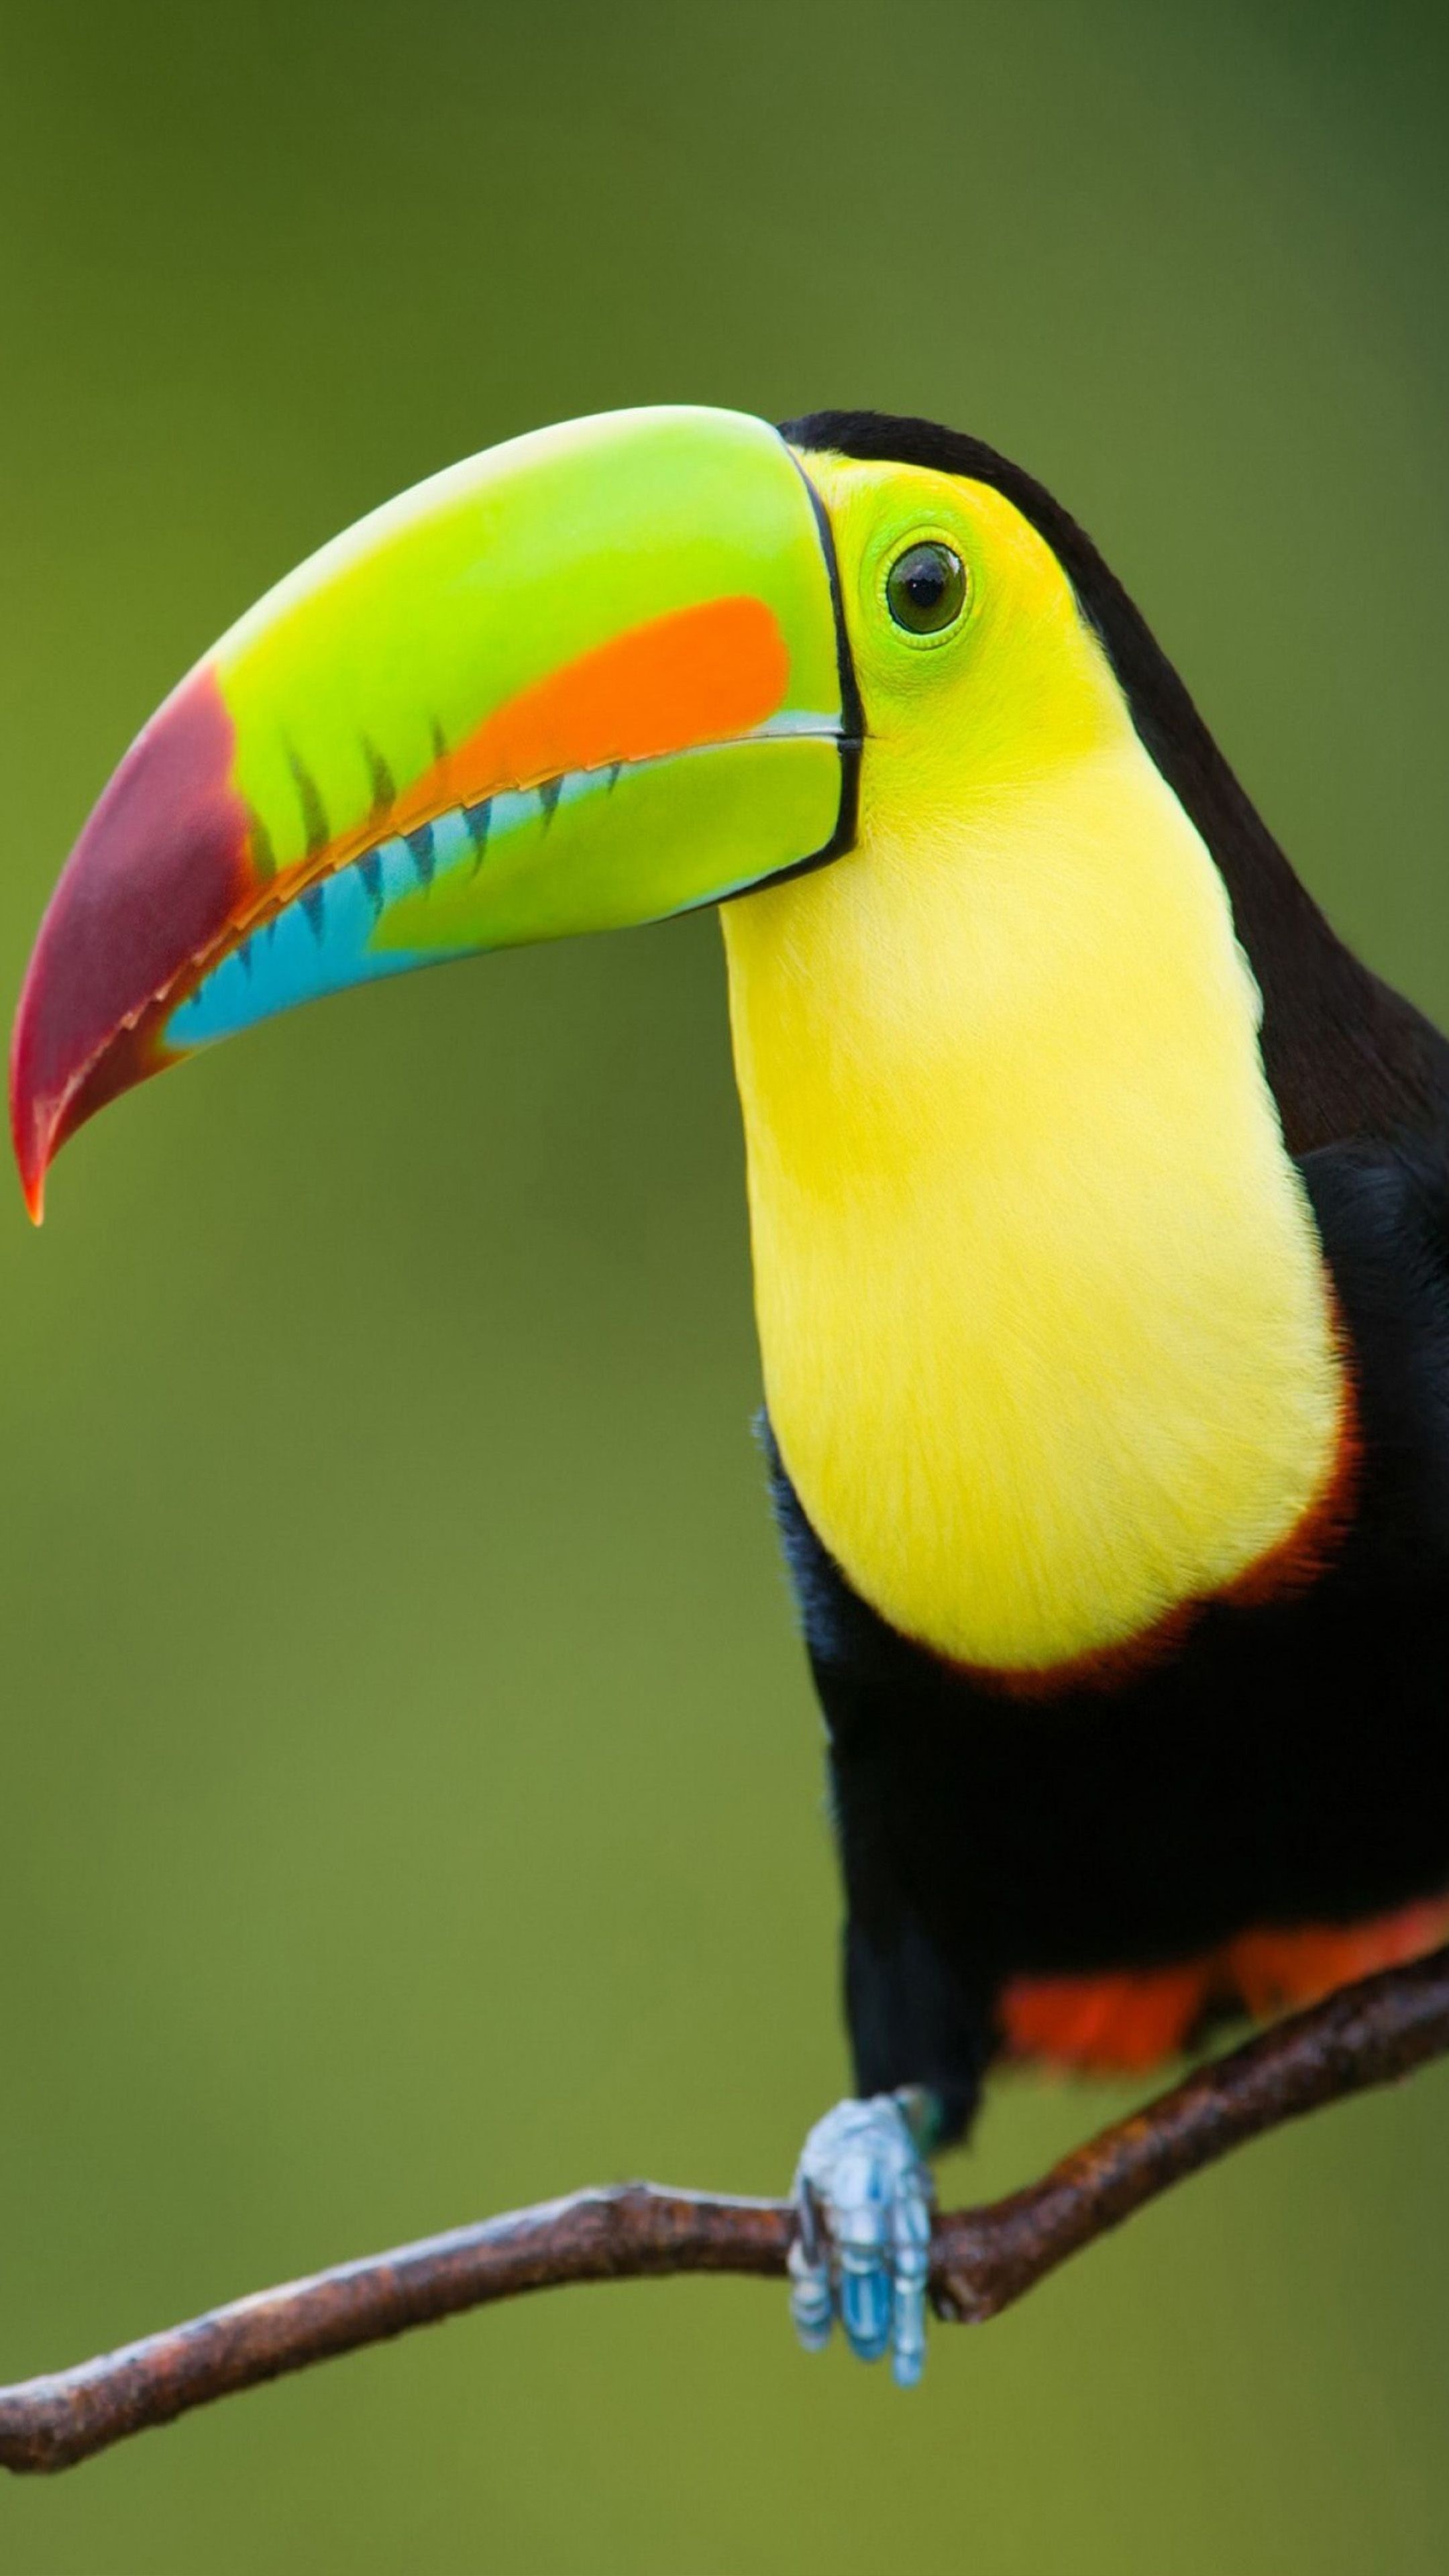 Aesthetic wallpaper, Colourful toucan, Nature photography, Stunning bird, 2160x3840 4K Phone